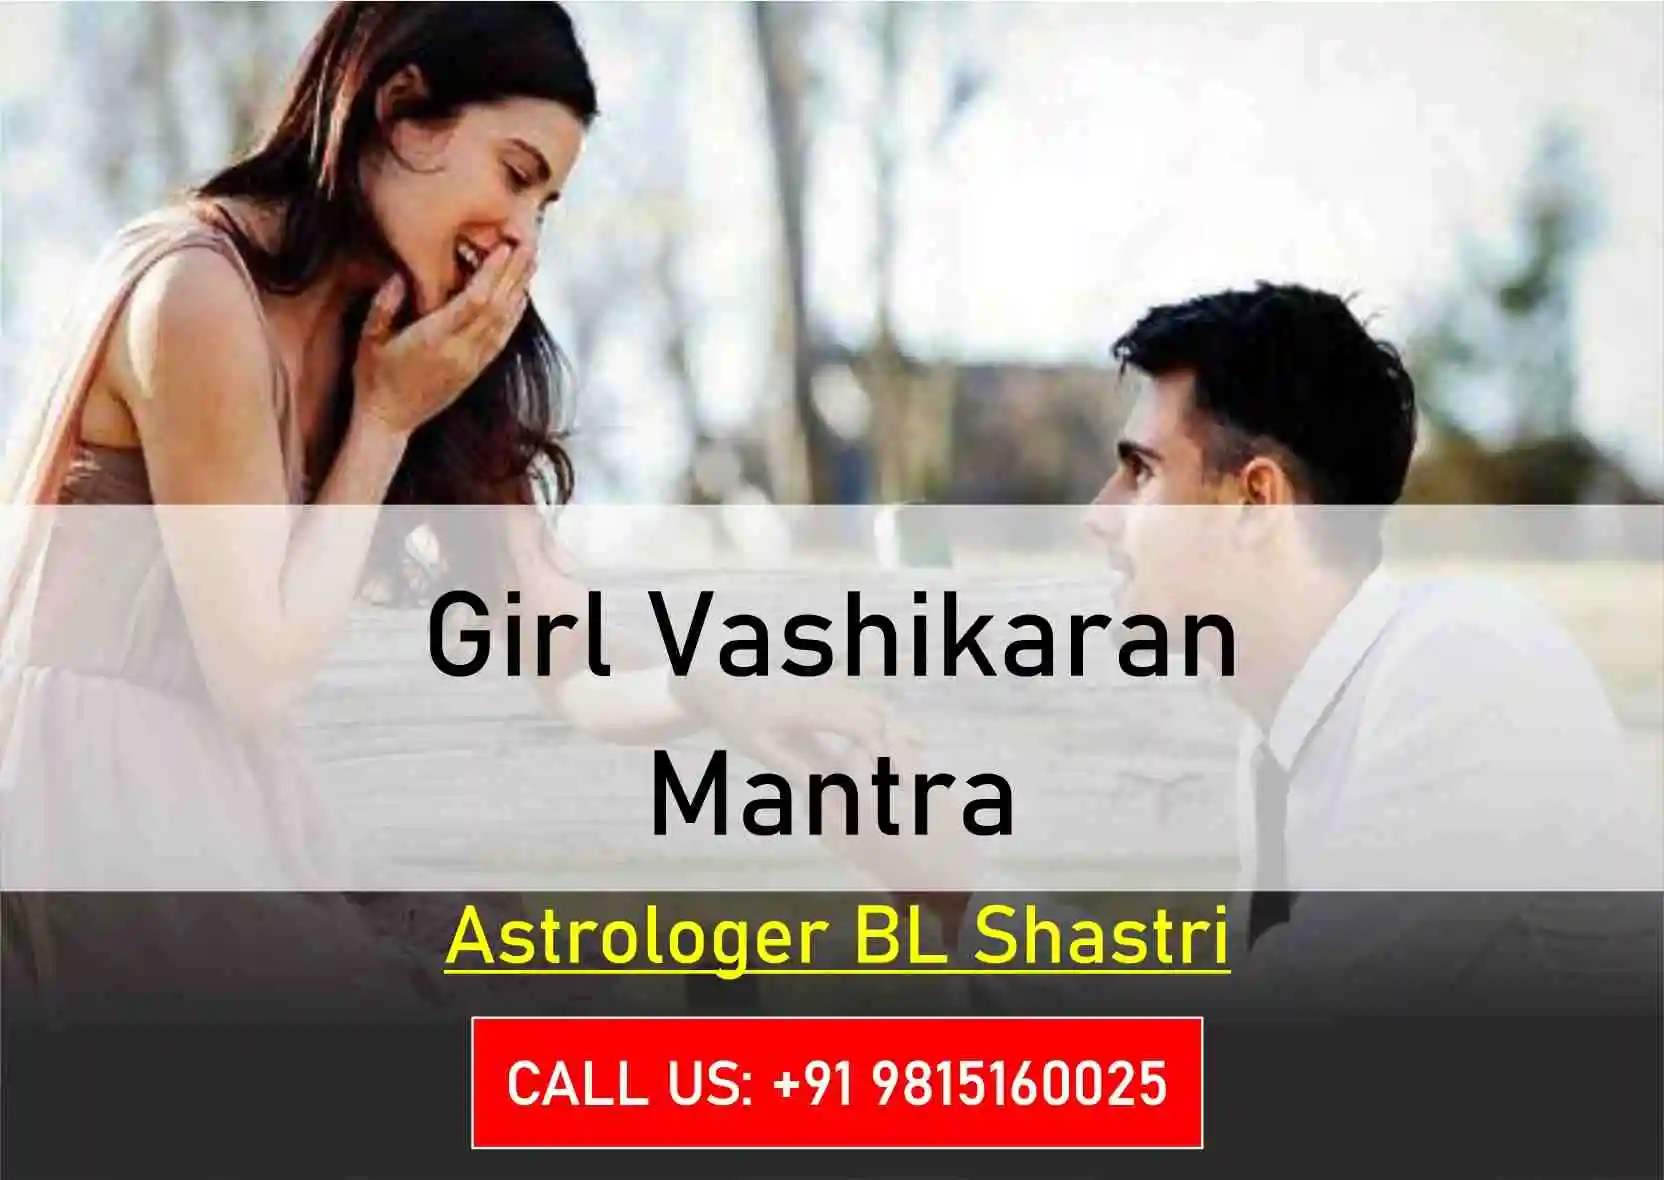 Girl Vashikaran Mantra